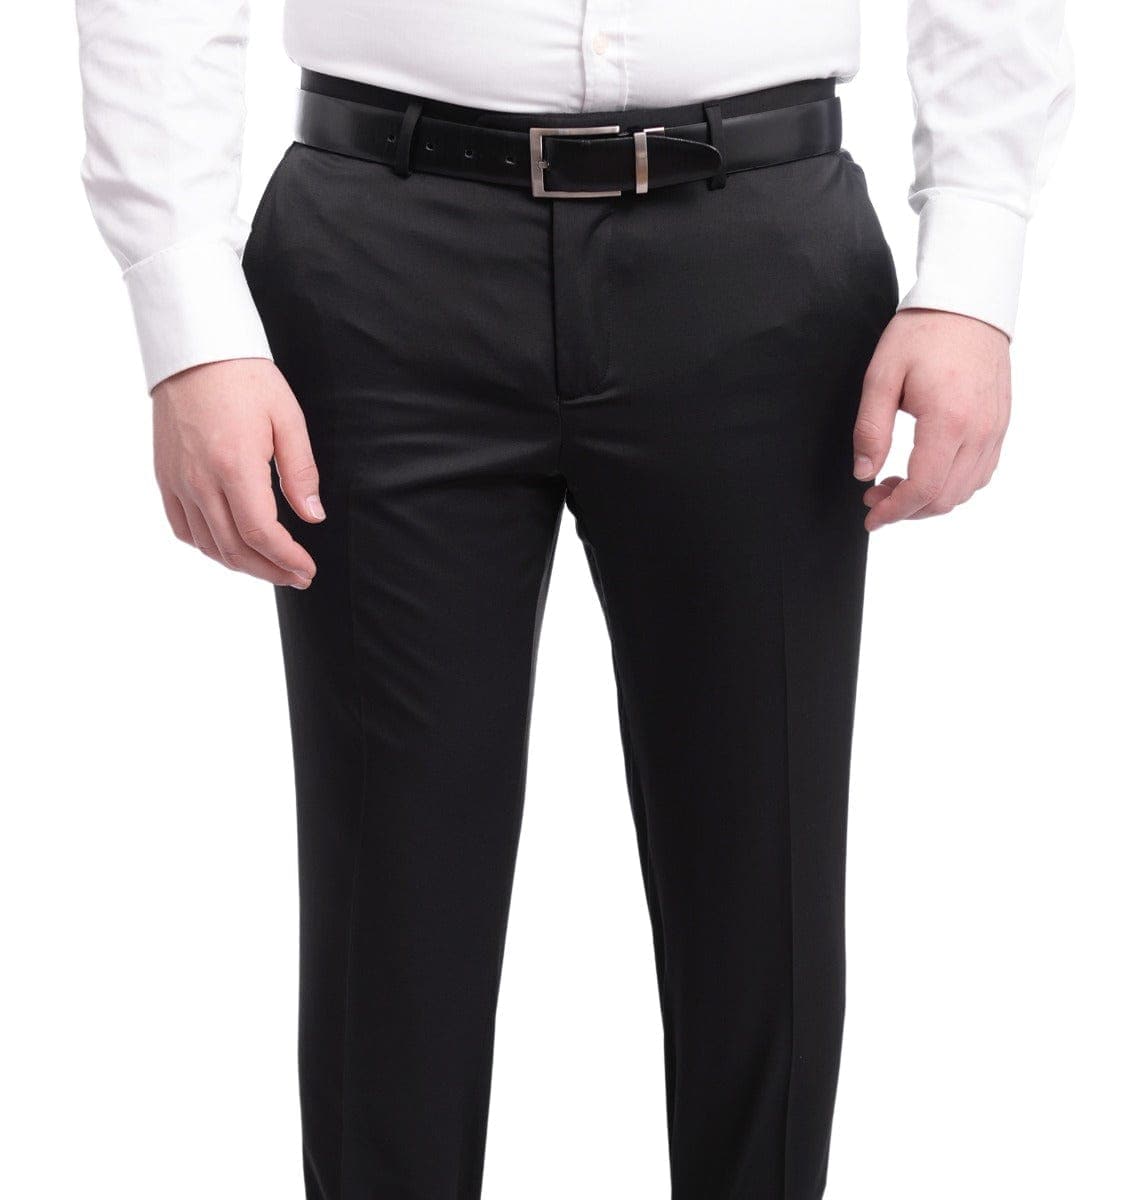 Cemden THREE PIECE SUITS Cemden Extra Slim Fit Gray With Black Diamond Check Three Piece Tuxedo